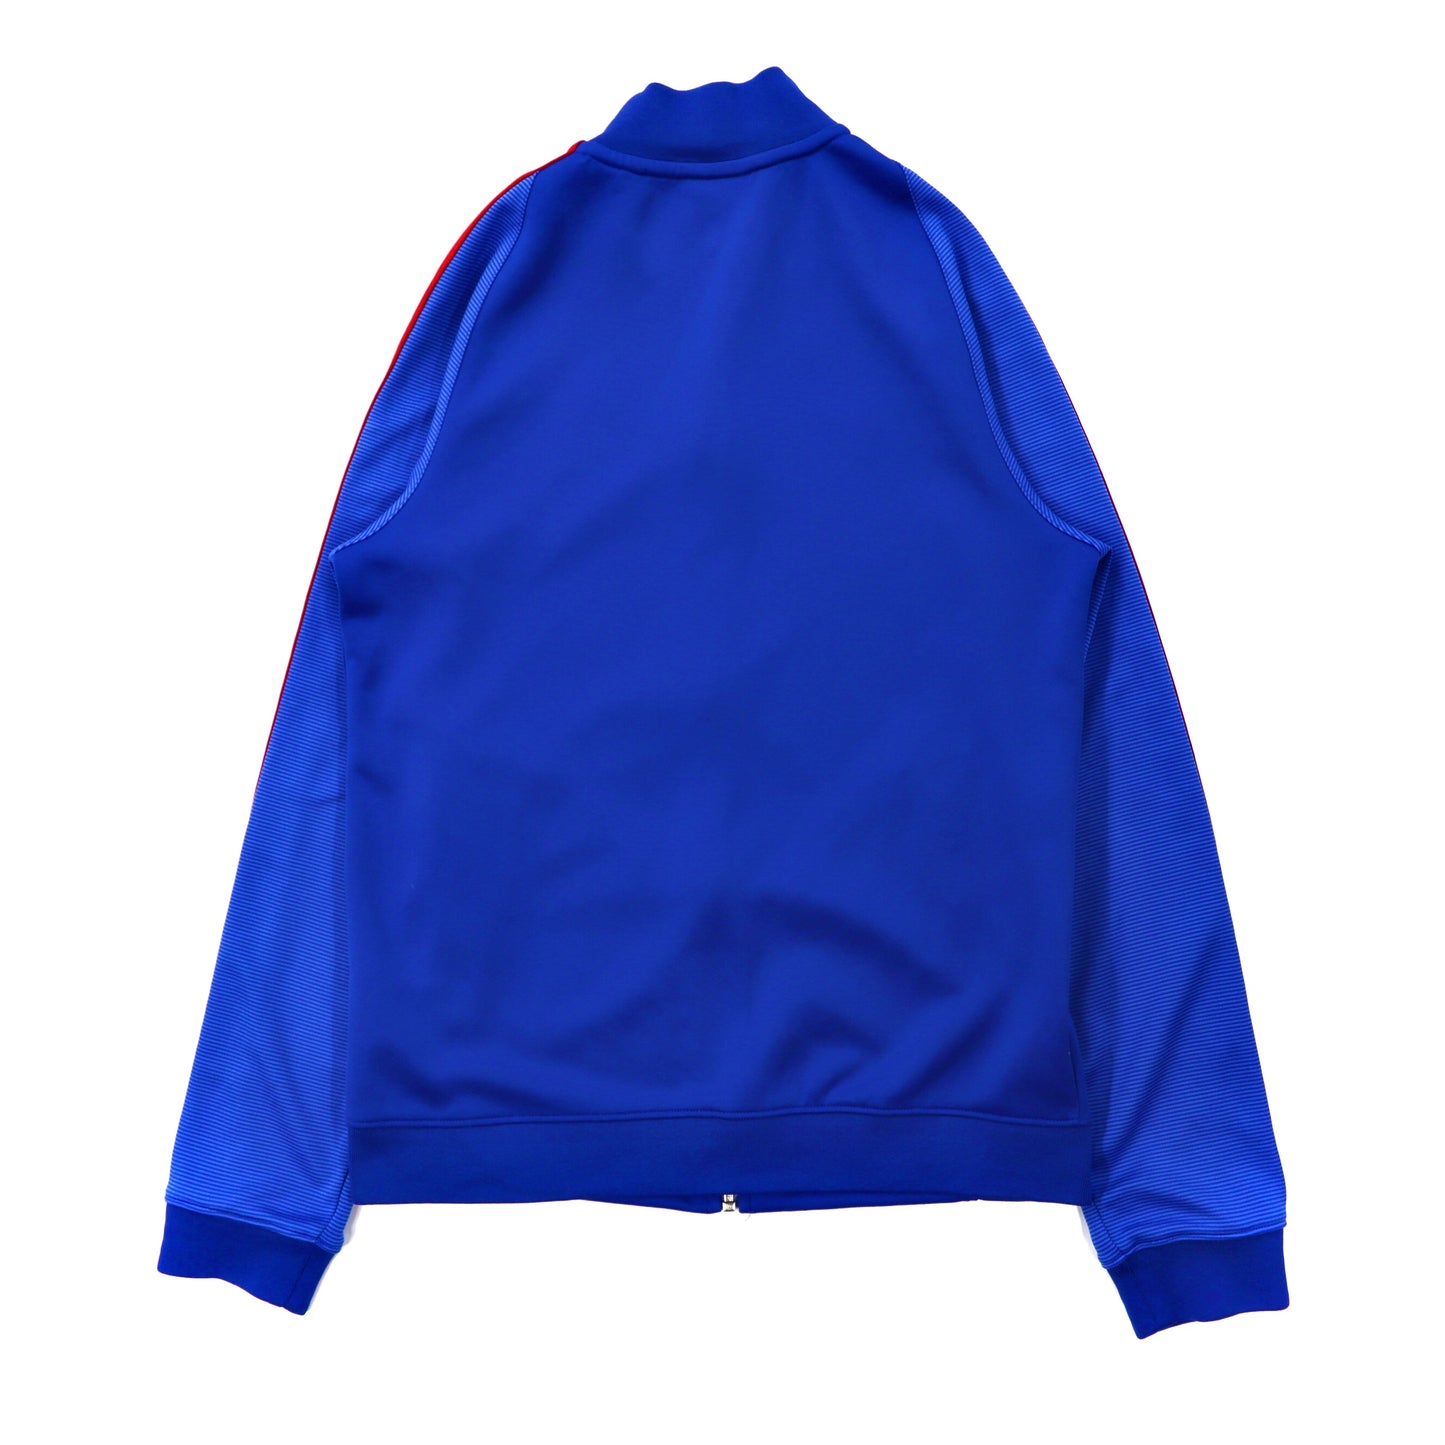 NIKE TRACK JACKET S Blue Polyester FC Barcelona logo embroidery